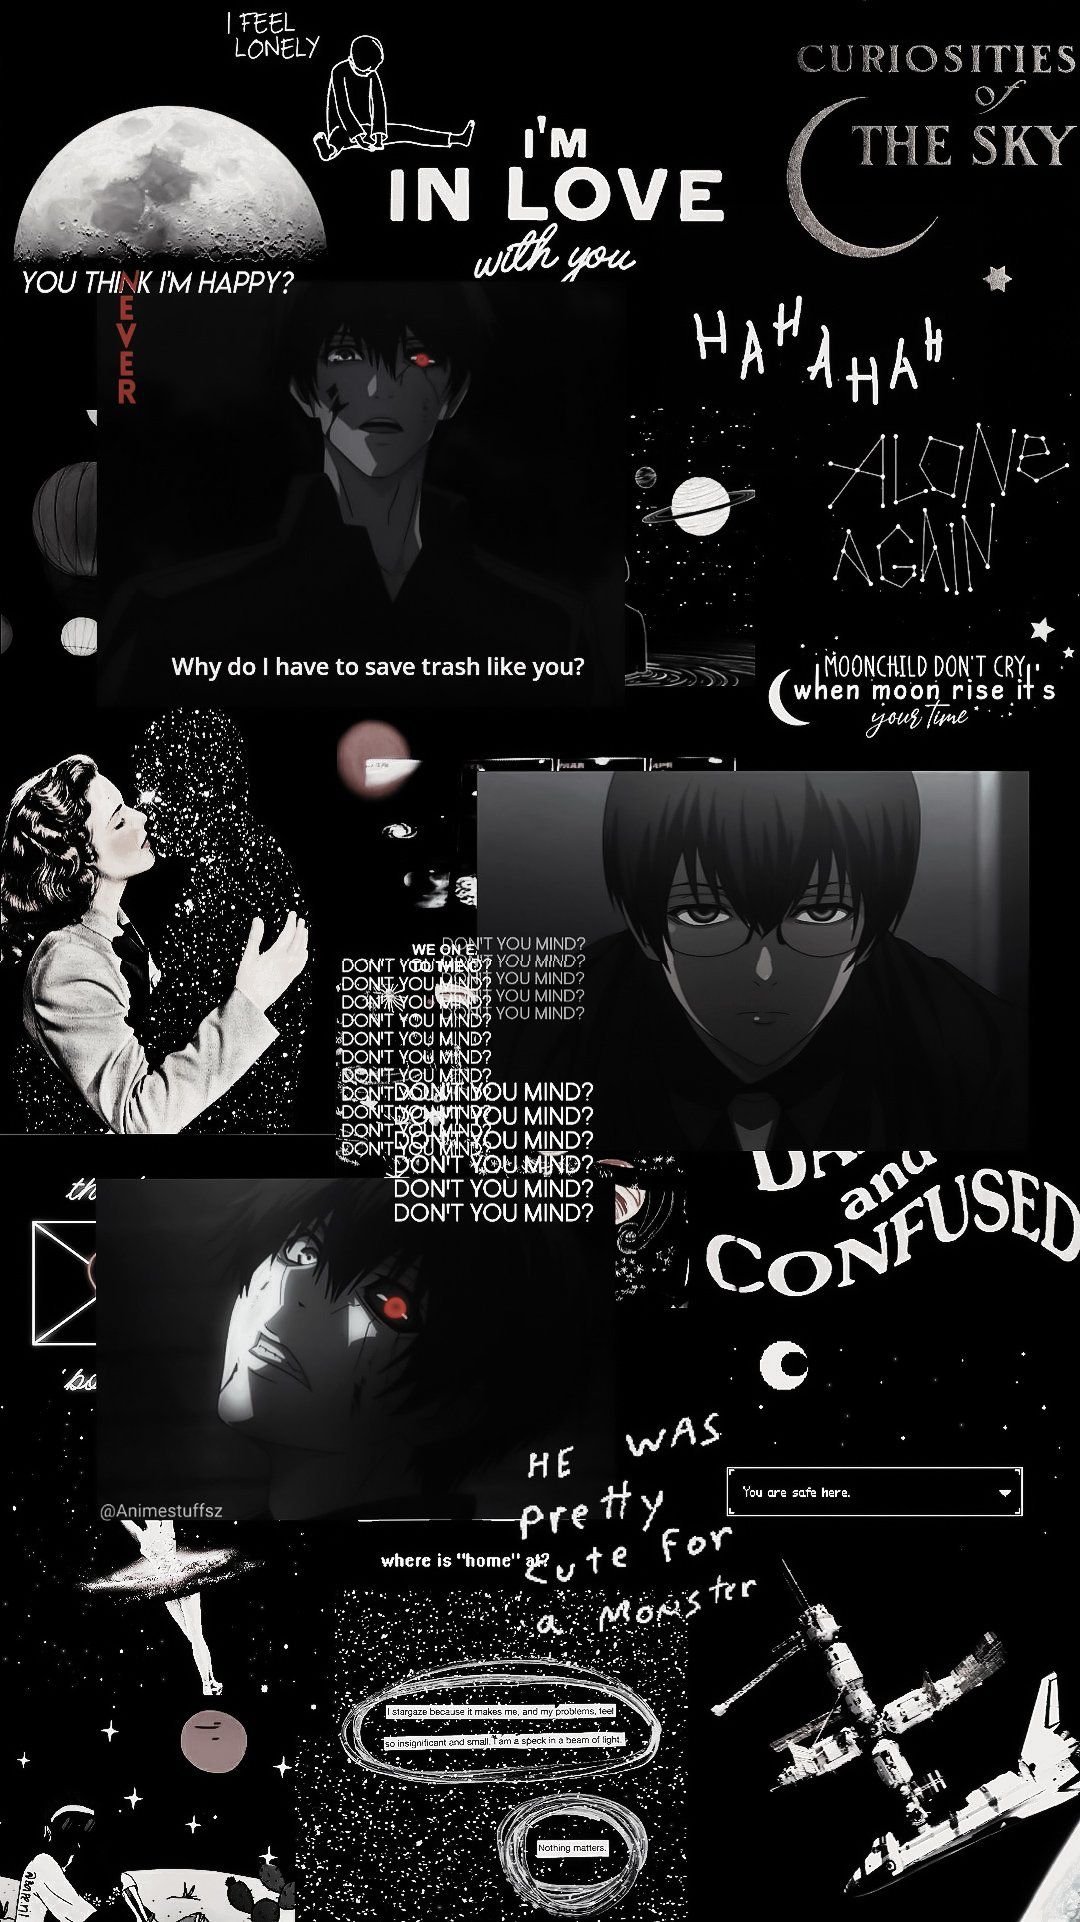 Dark Anime Wallpaper Download